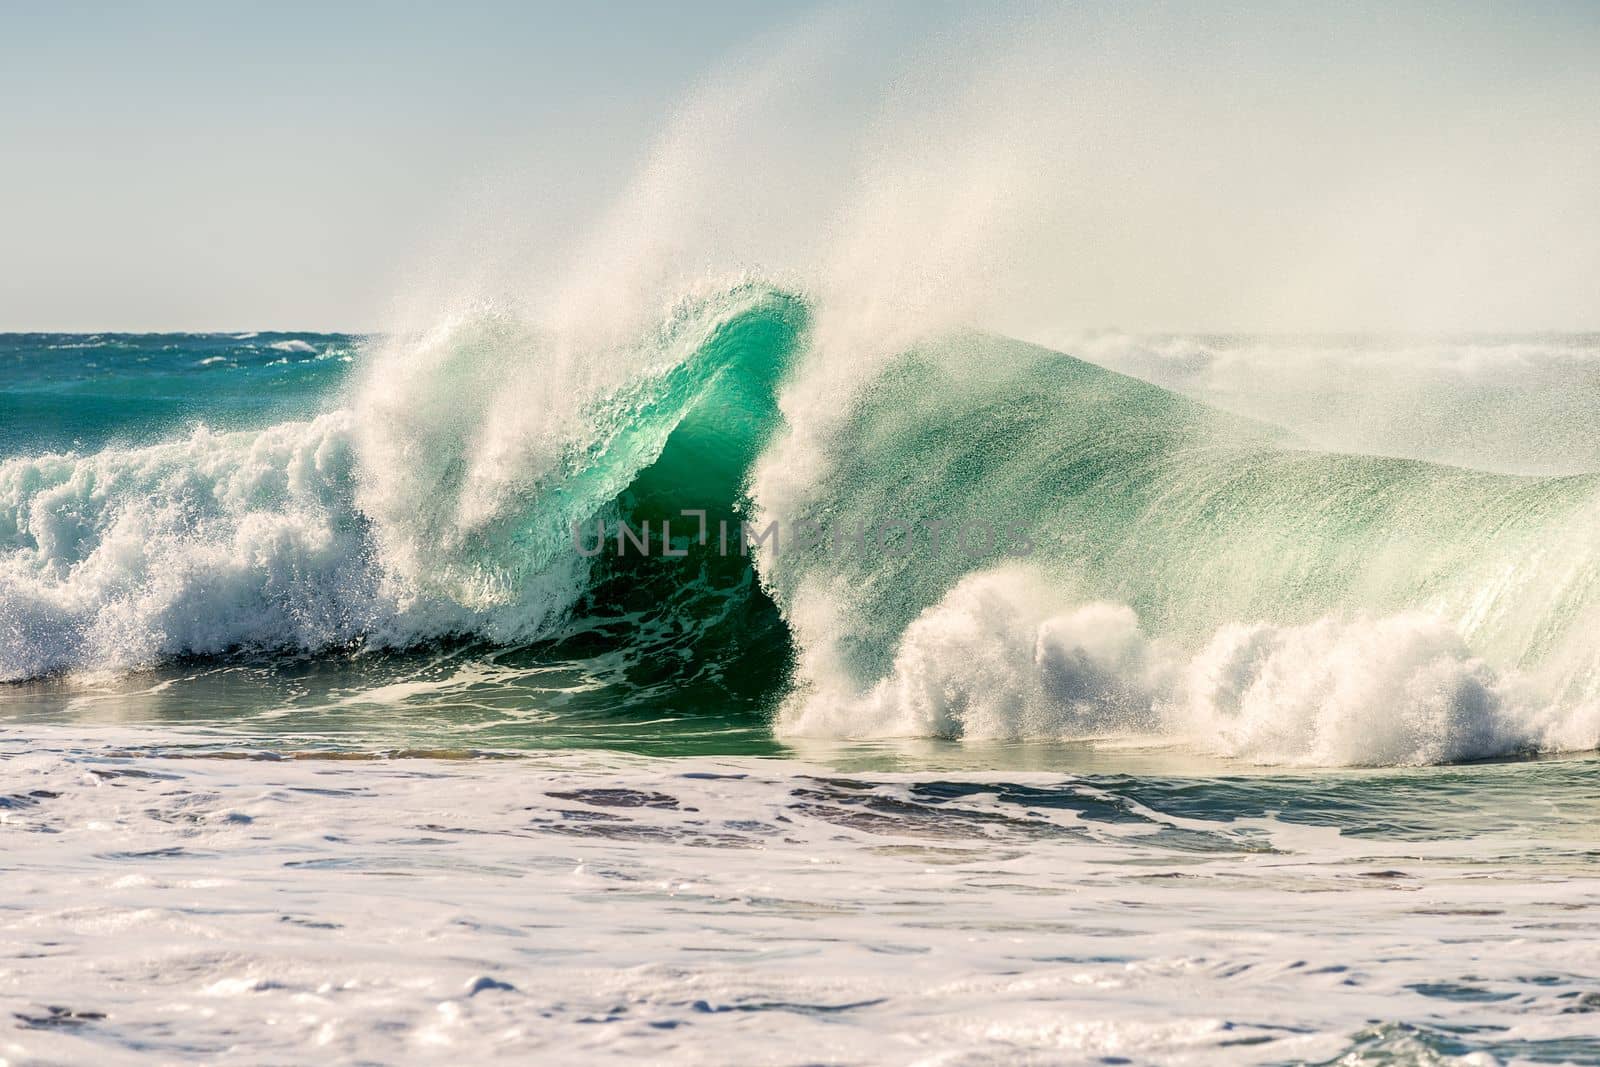 spectacular wave breaking powerful among foam by raulmelldo